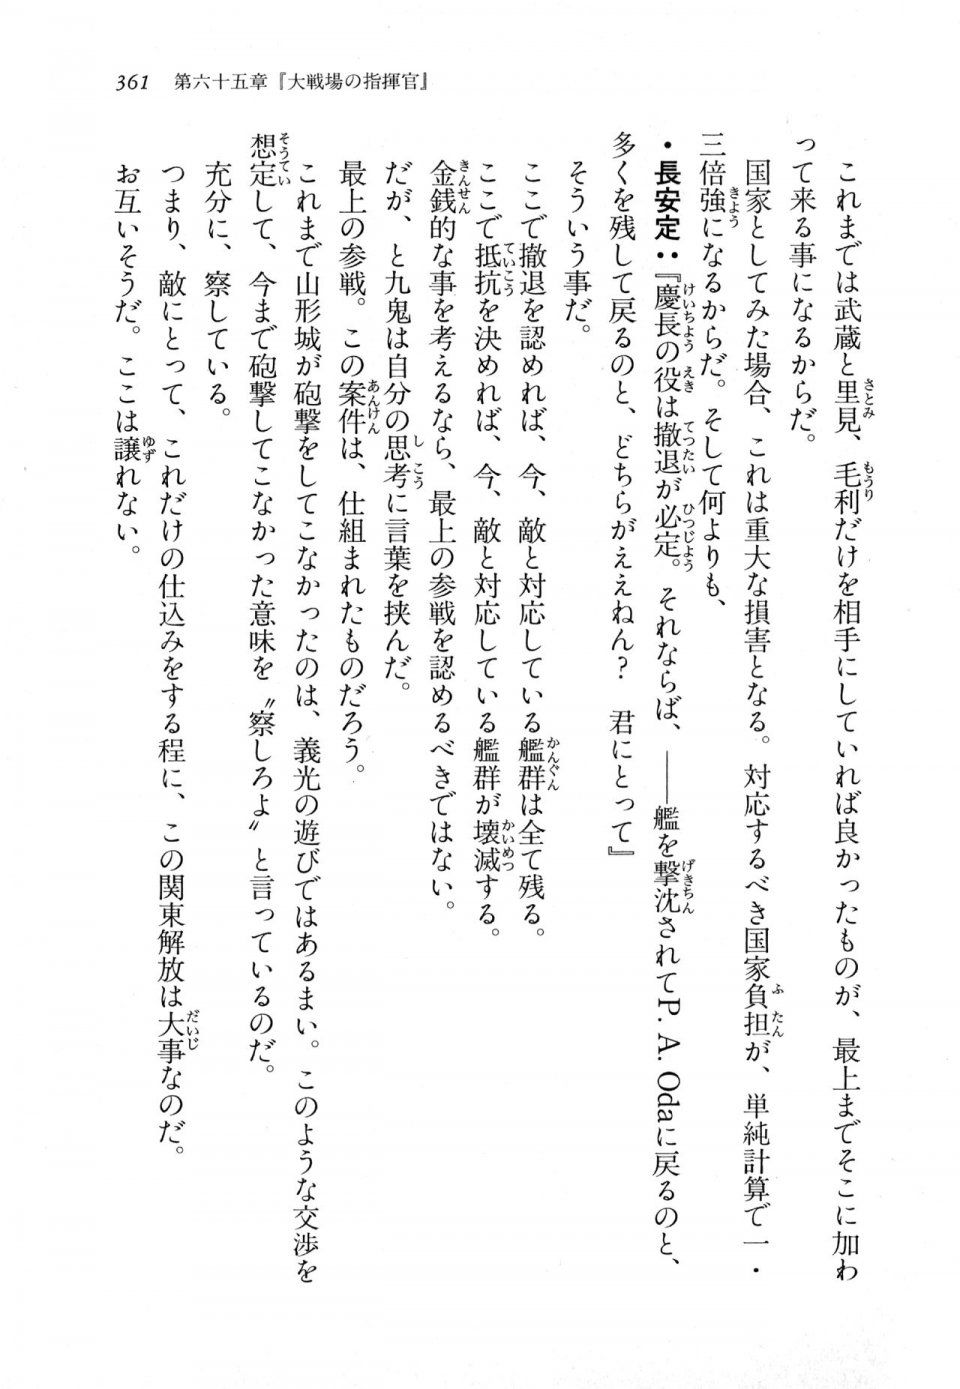 Kyoukai Senjou no Horizon LN Vol 18(7C) Part 1 - Photo #361